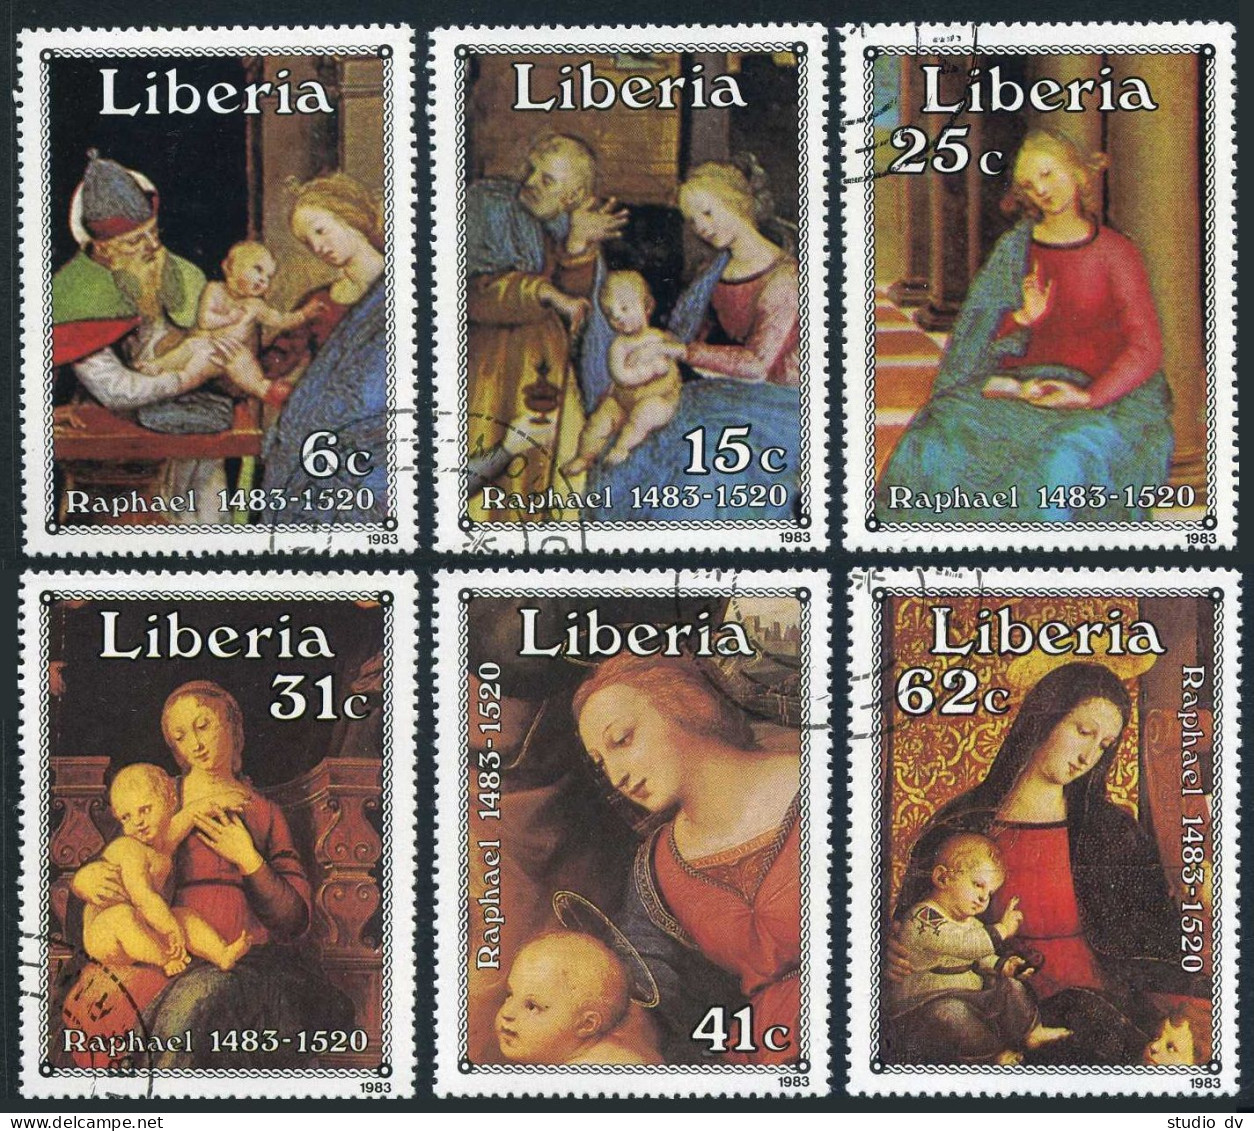 Liberia 975-980,CTO.Mi 1281-1286. Christmas 1983.Raphael Paintings. - Liberia